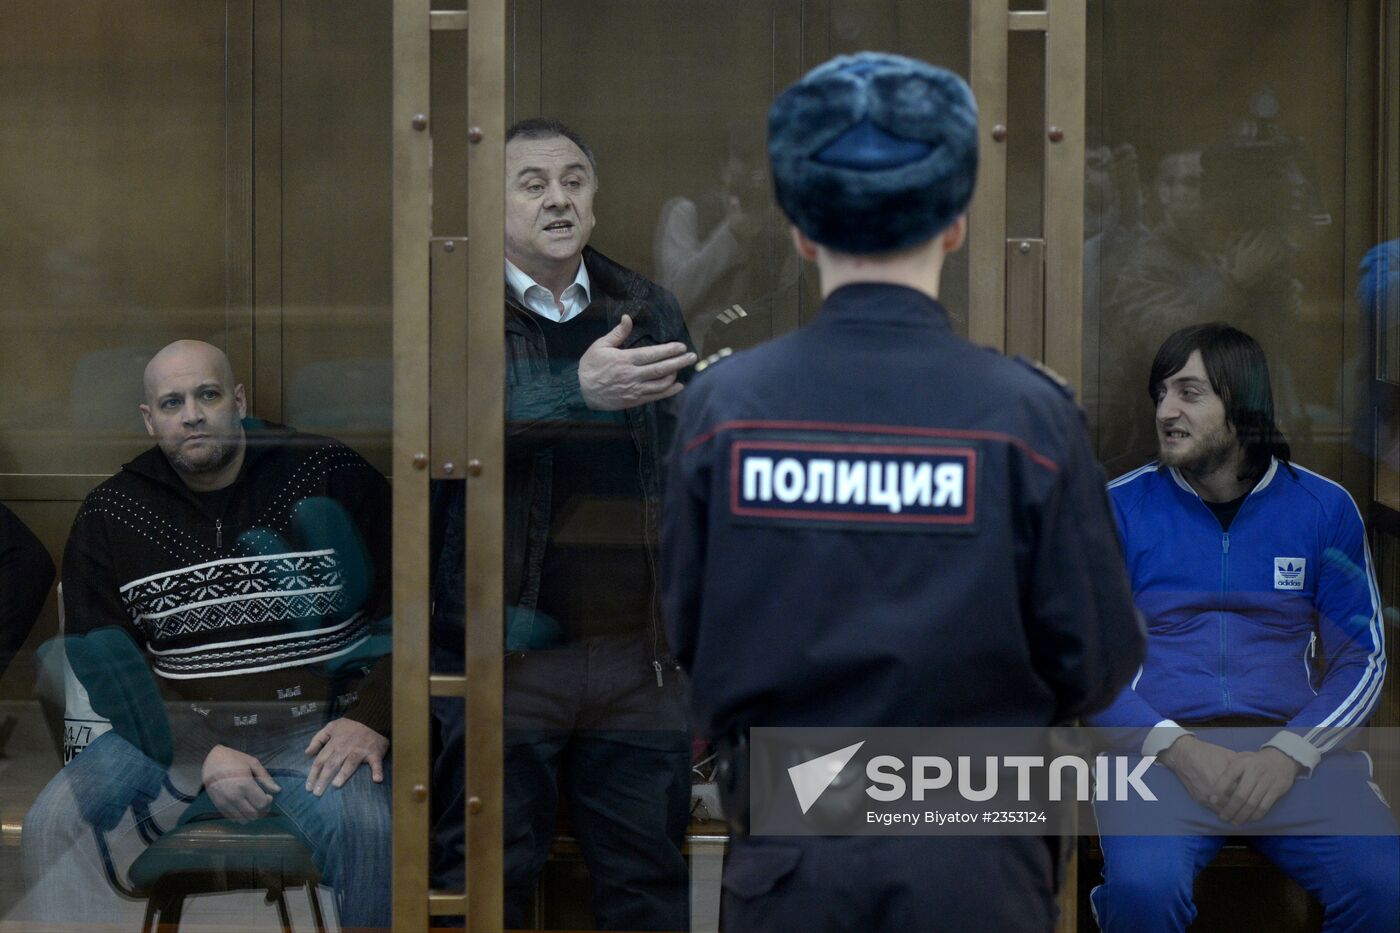 Anna Politkovskaya murder trial